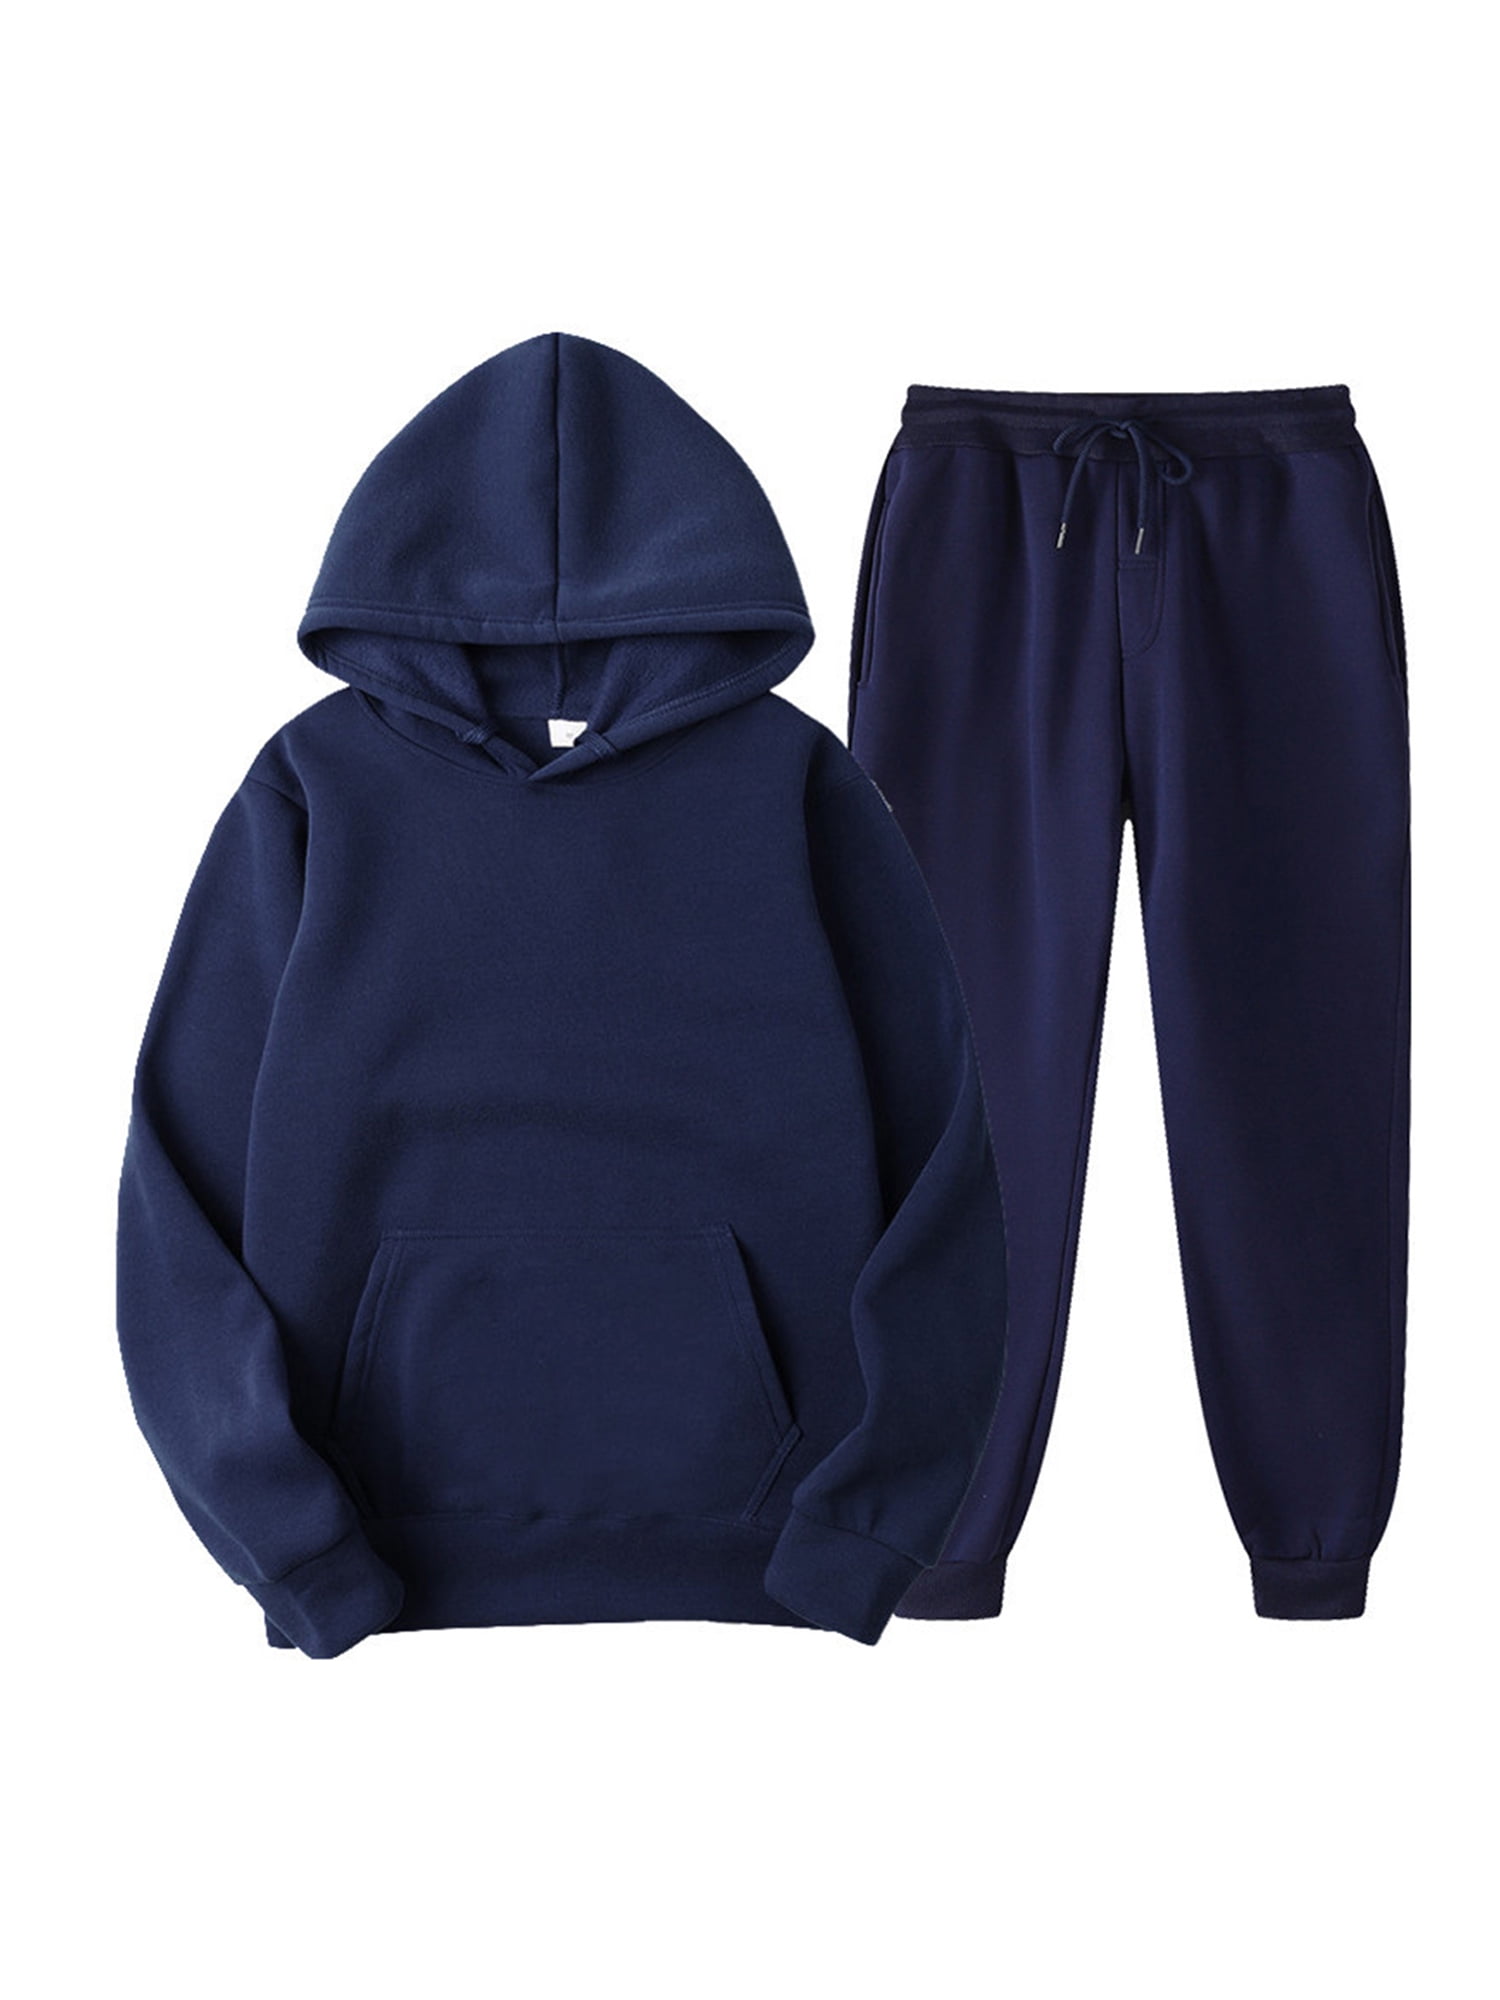 Men Sweatshirt Tracksuit Sets Hooded Zipper Jacket Jogging Pants Sports  Casual N | eBay